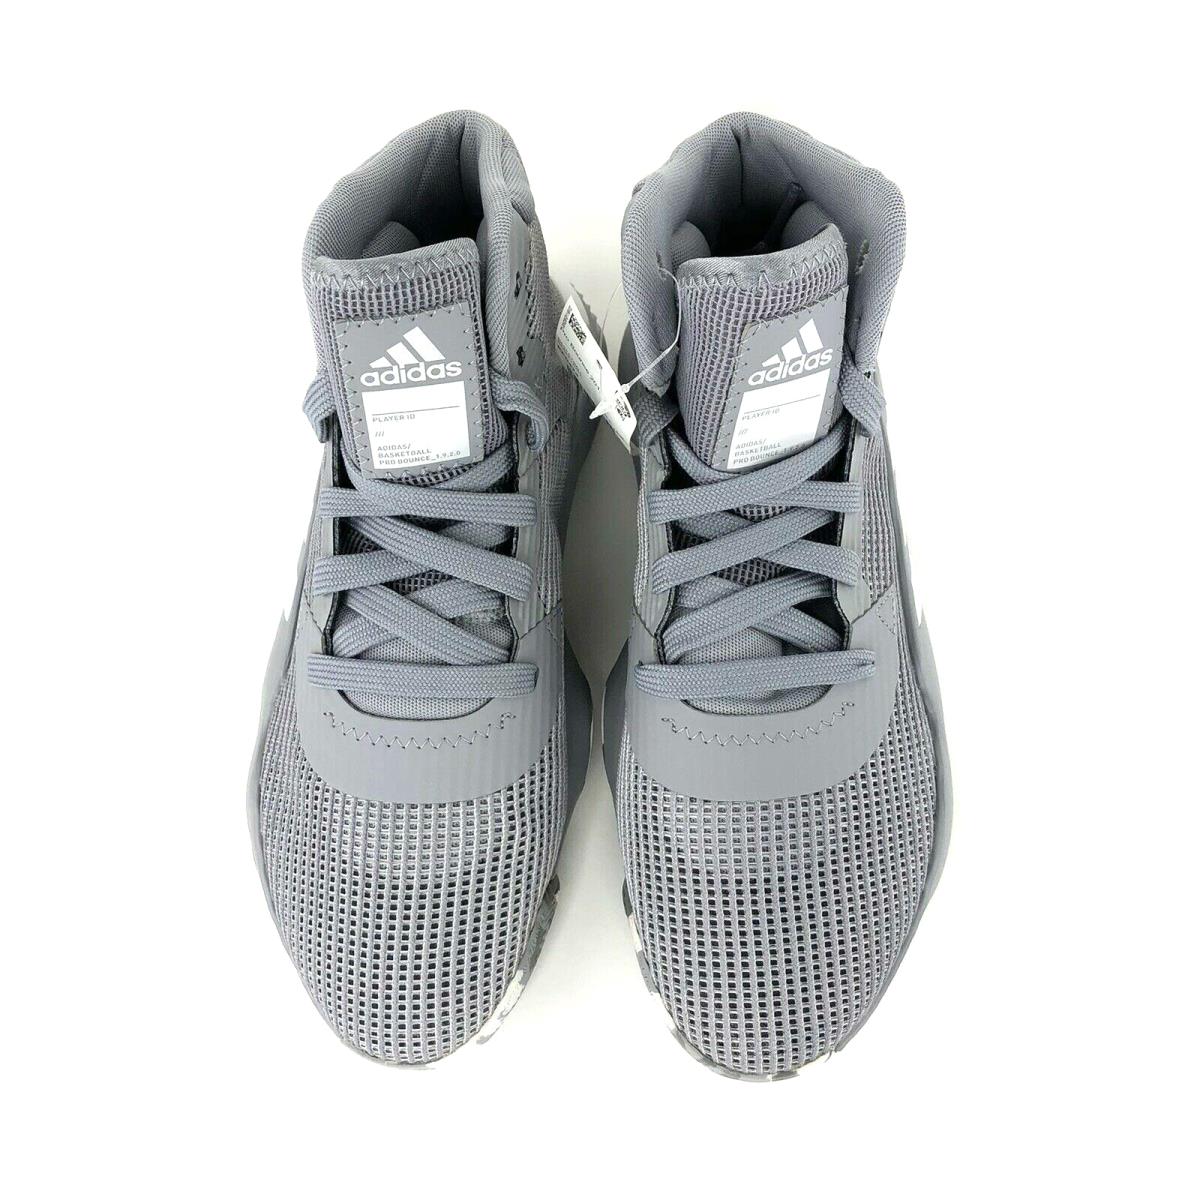 Adidas shoes Pro Bounce - Gray 3